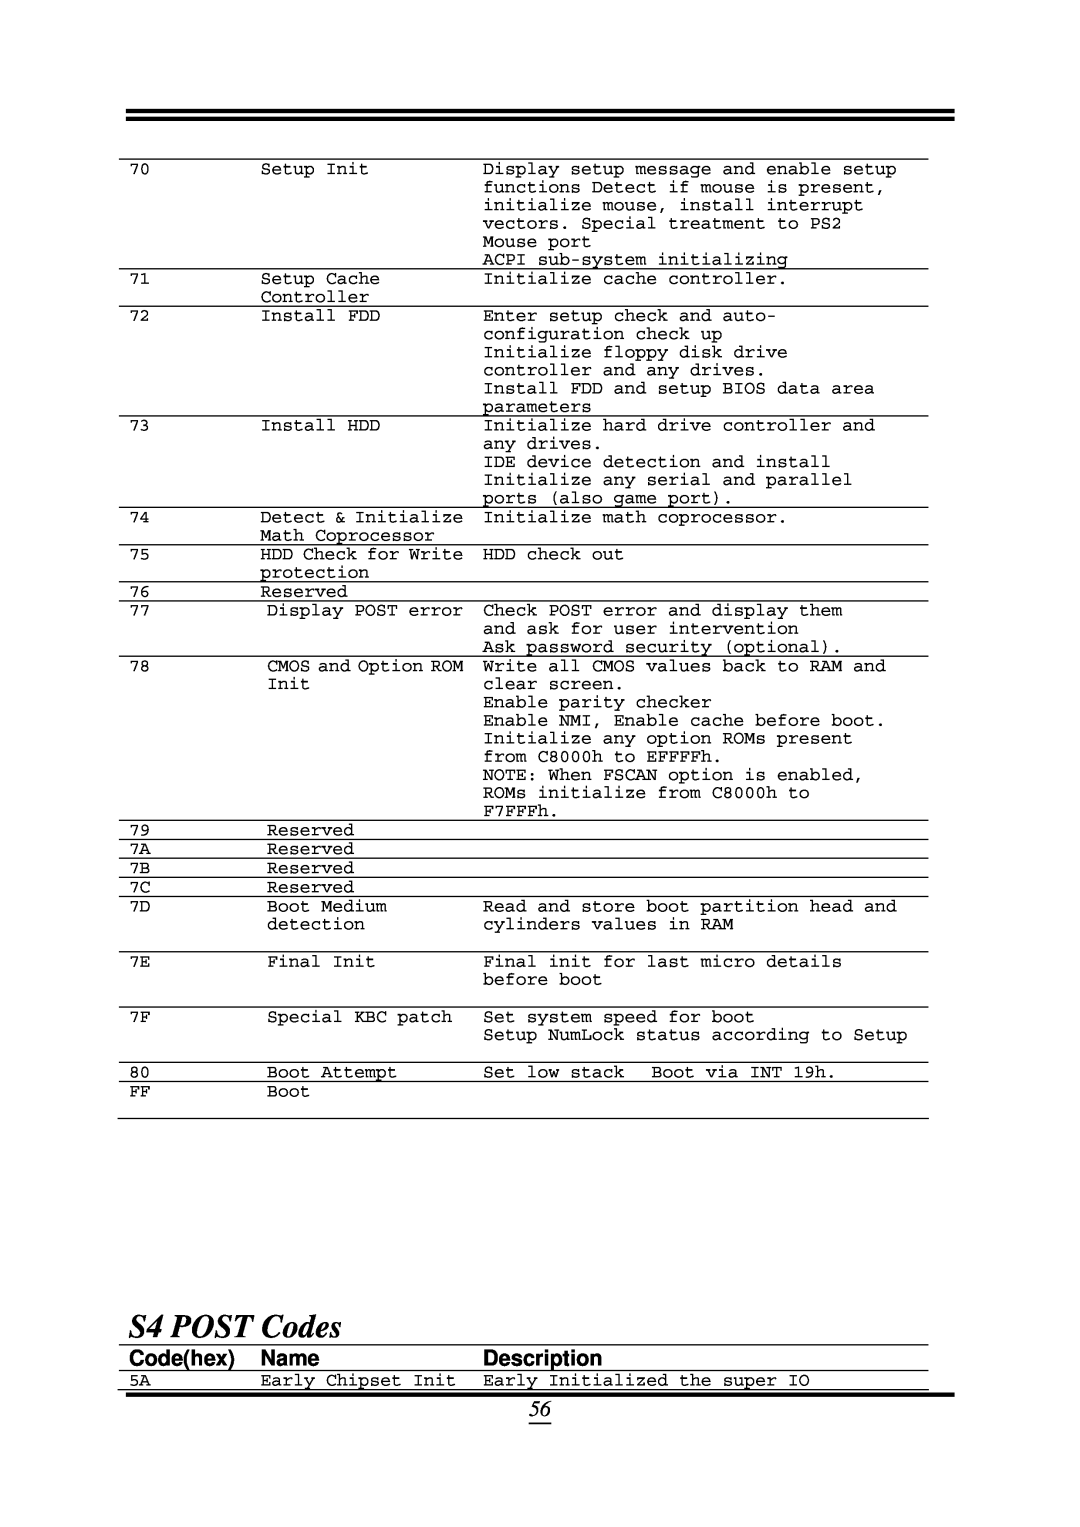 AMD SB750, 790GX user manual S4 POST Codes, Codehex, Name, Description 